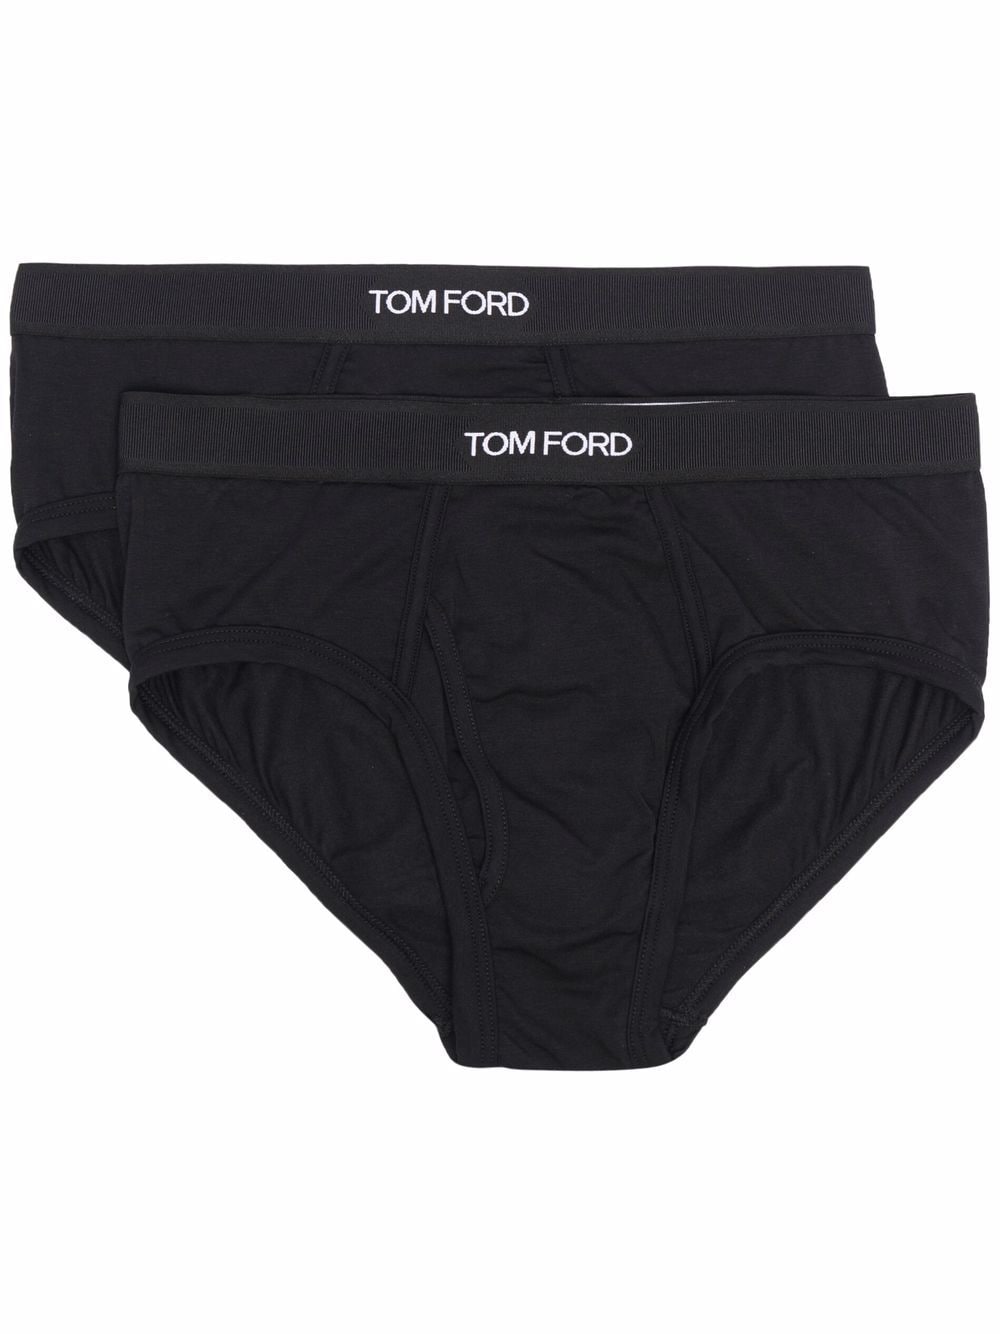 TOM FORD logo-waistband briefs (pack of 2) - Black von TOM FORD